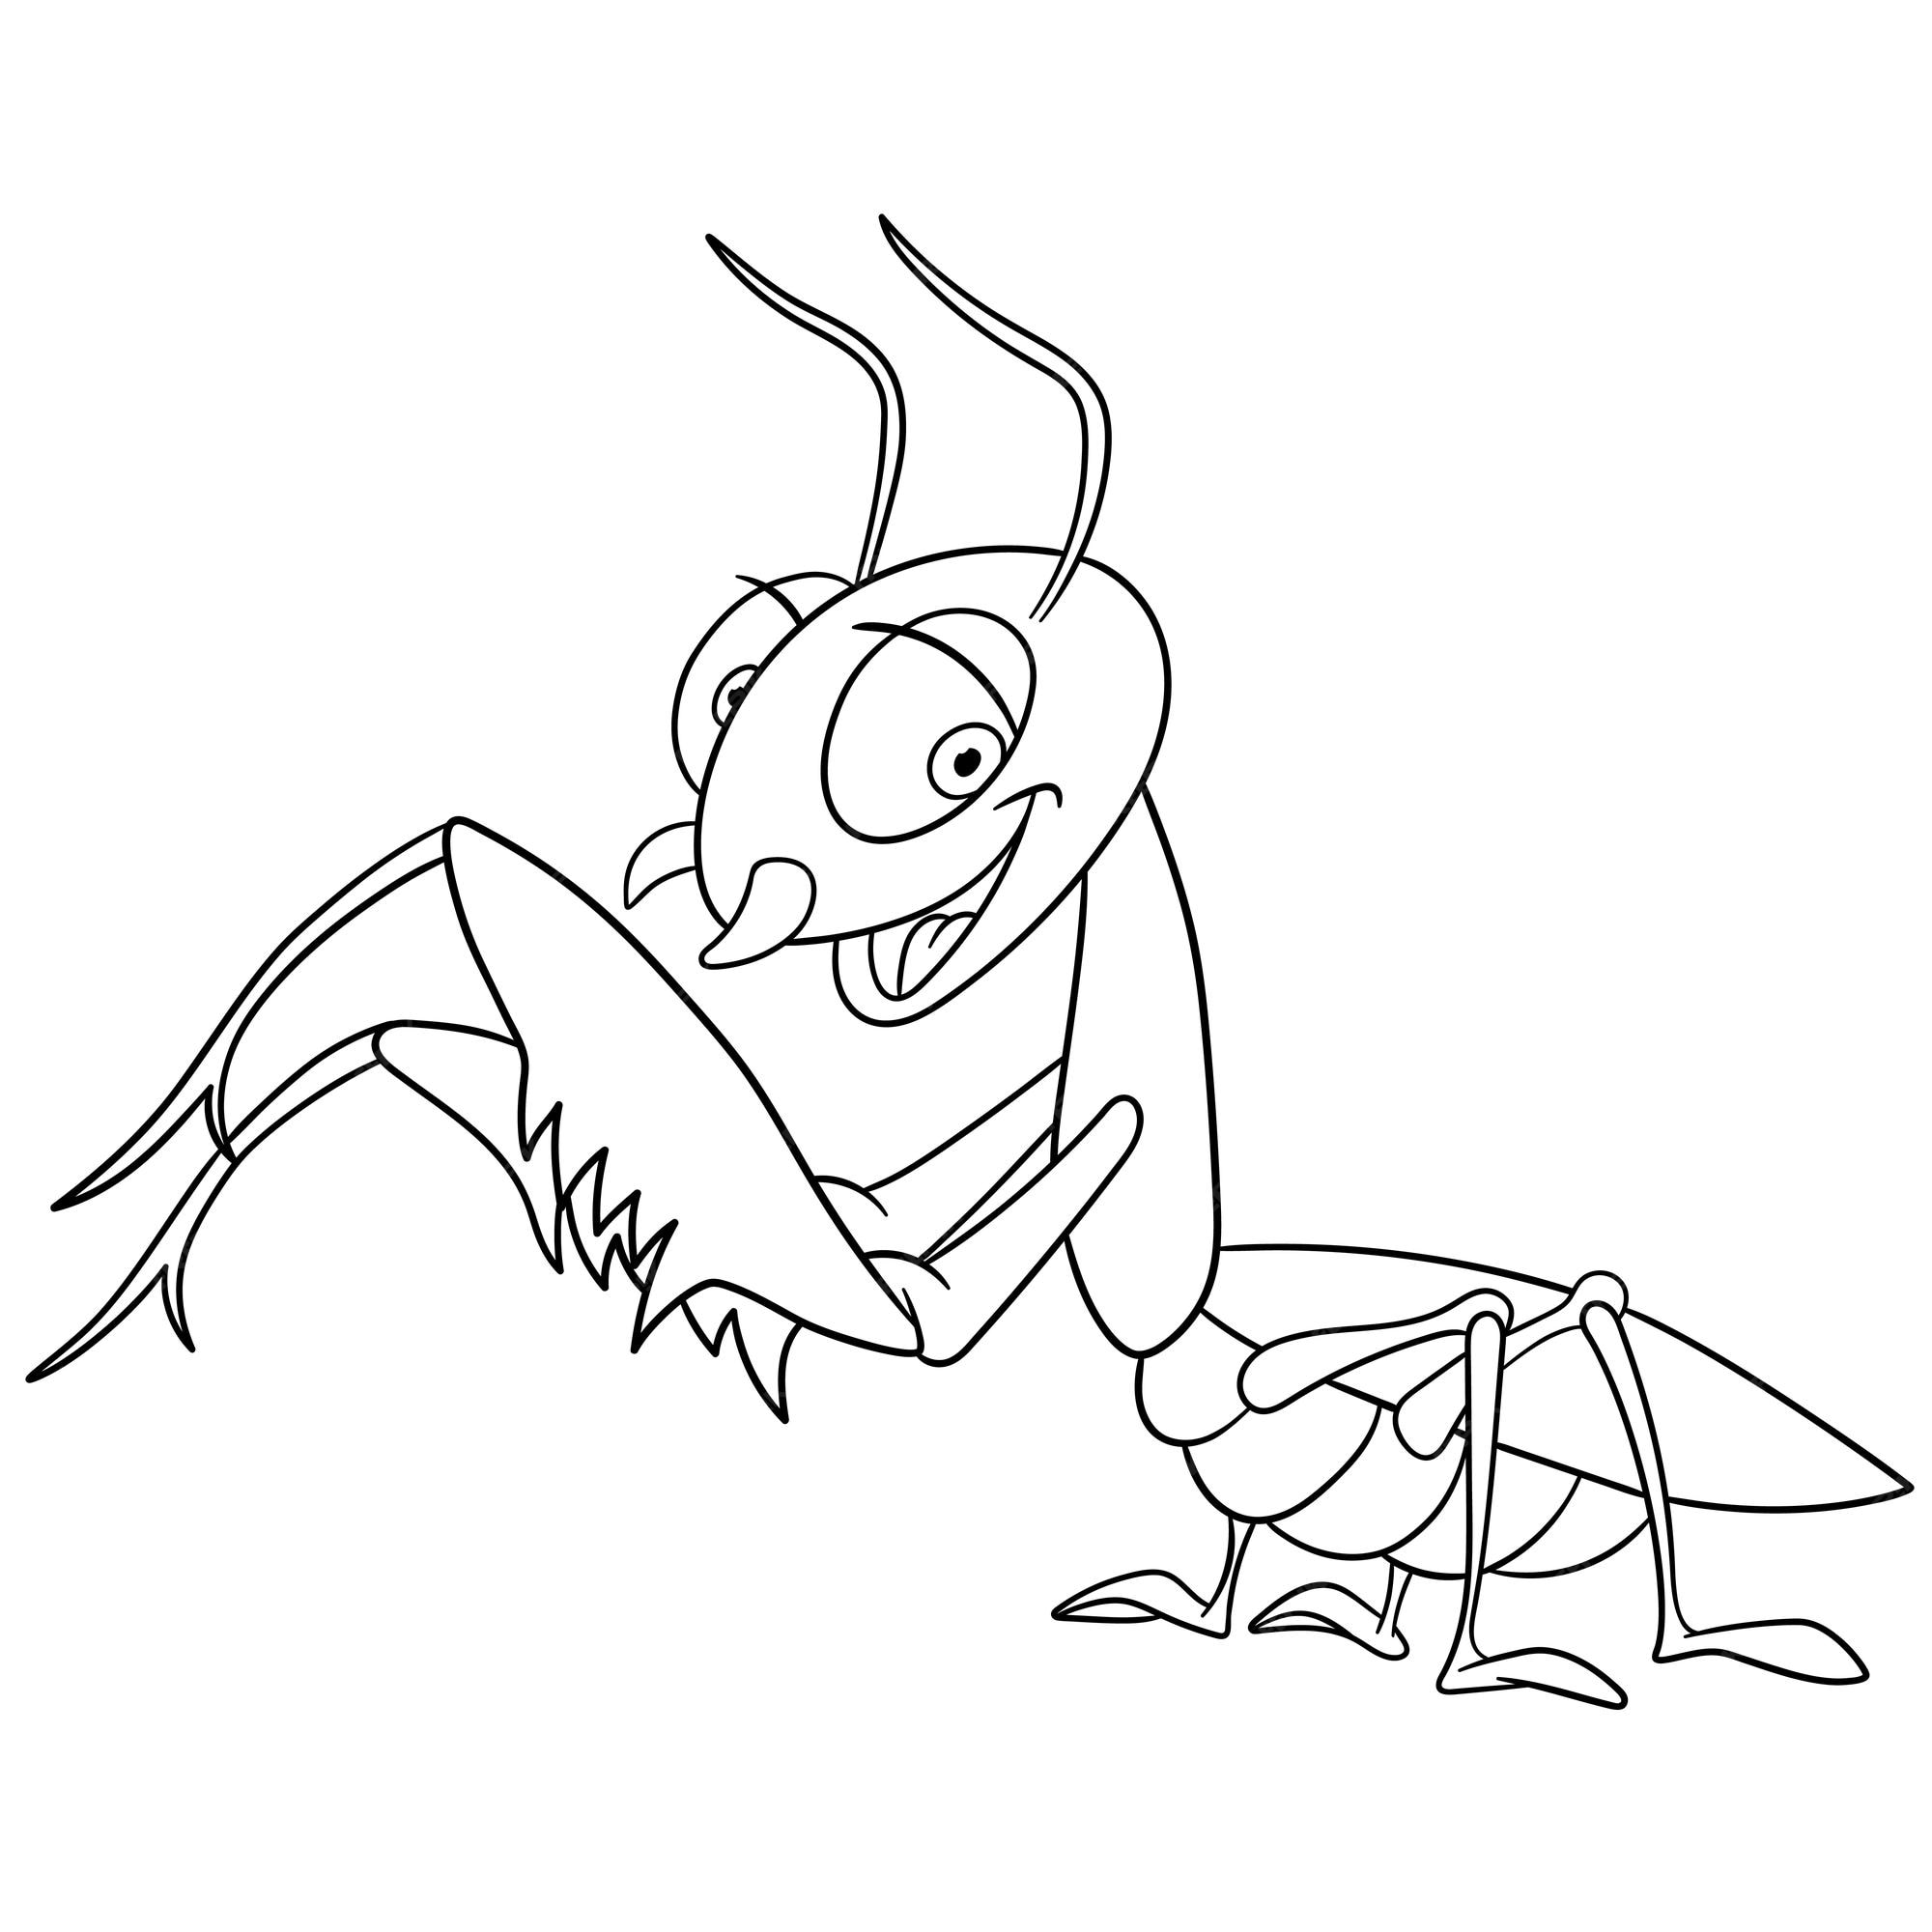 Premium vector cute happy praying mantis cartoon coloring book page for kids